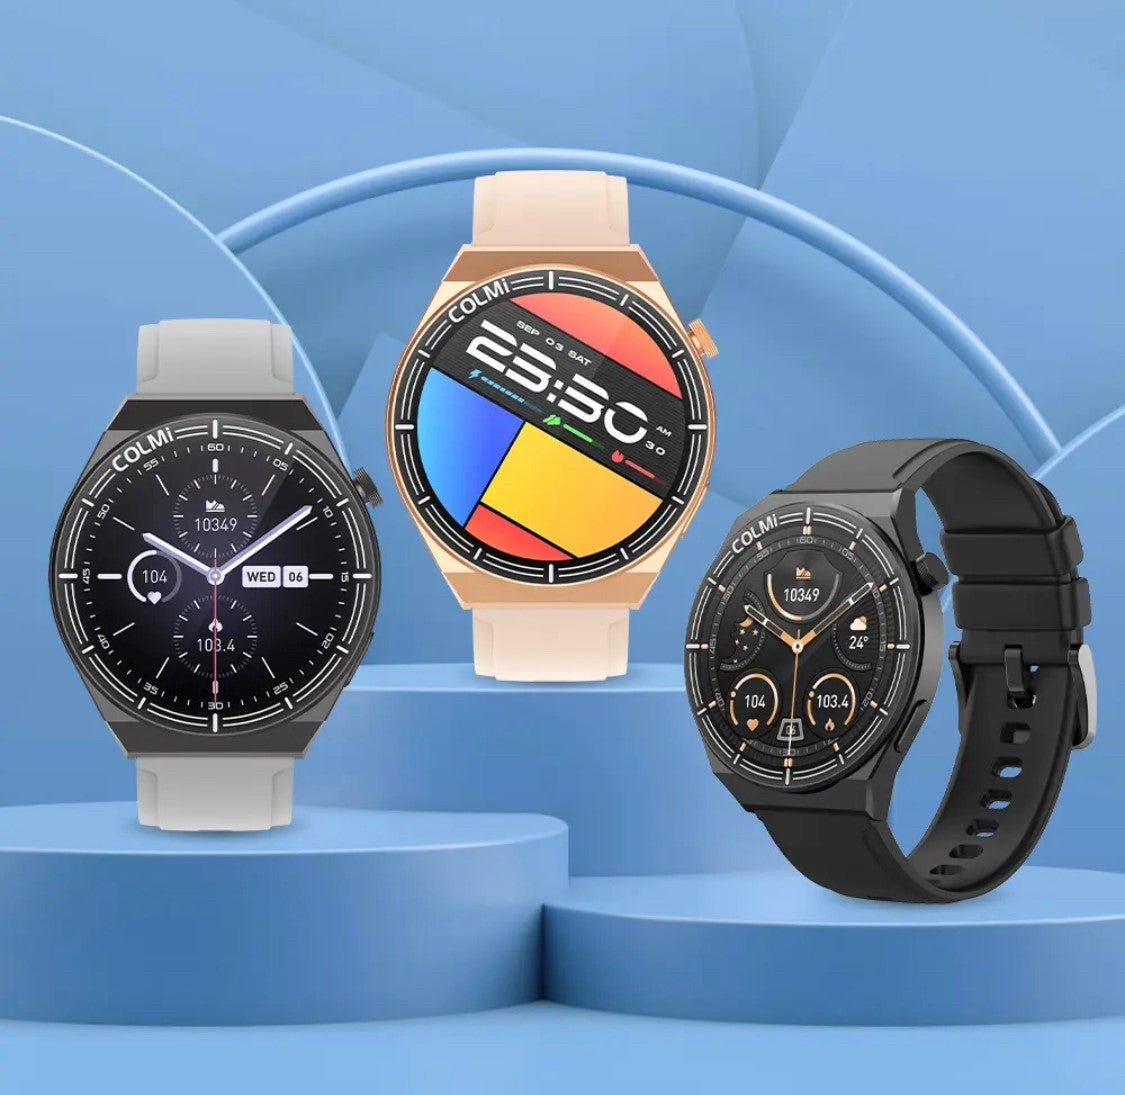 Best Watch Brands | Colmi Ci11 Black - Smart Watch South Africa